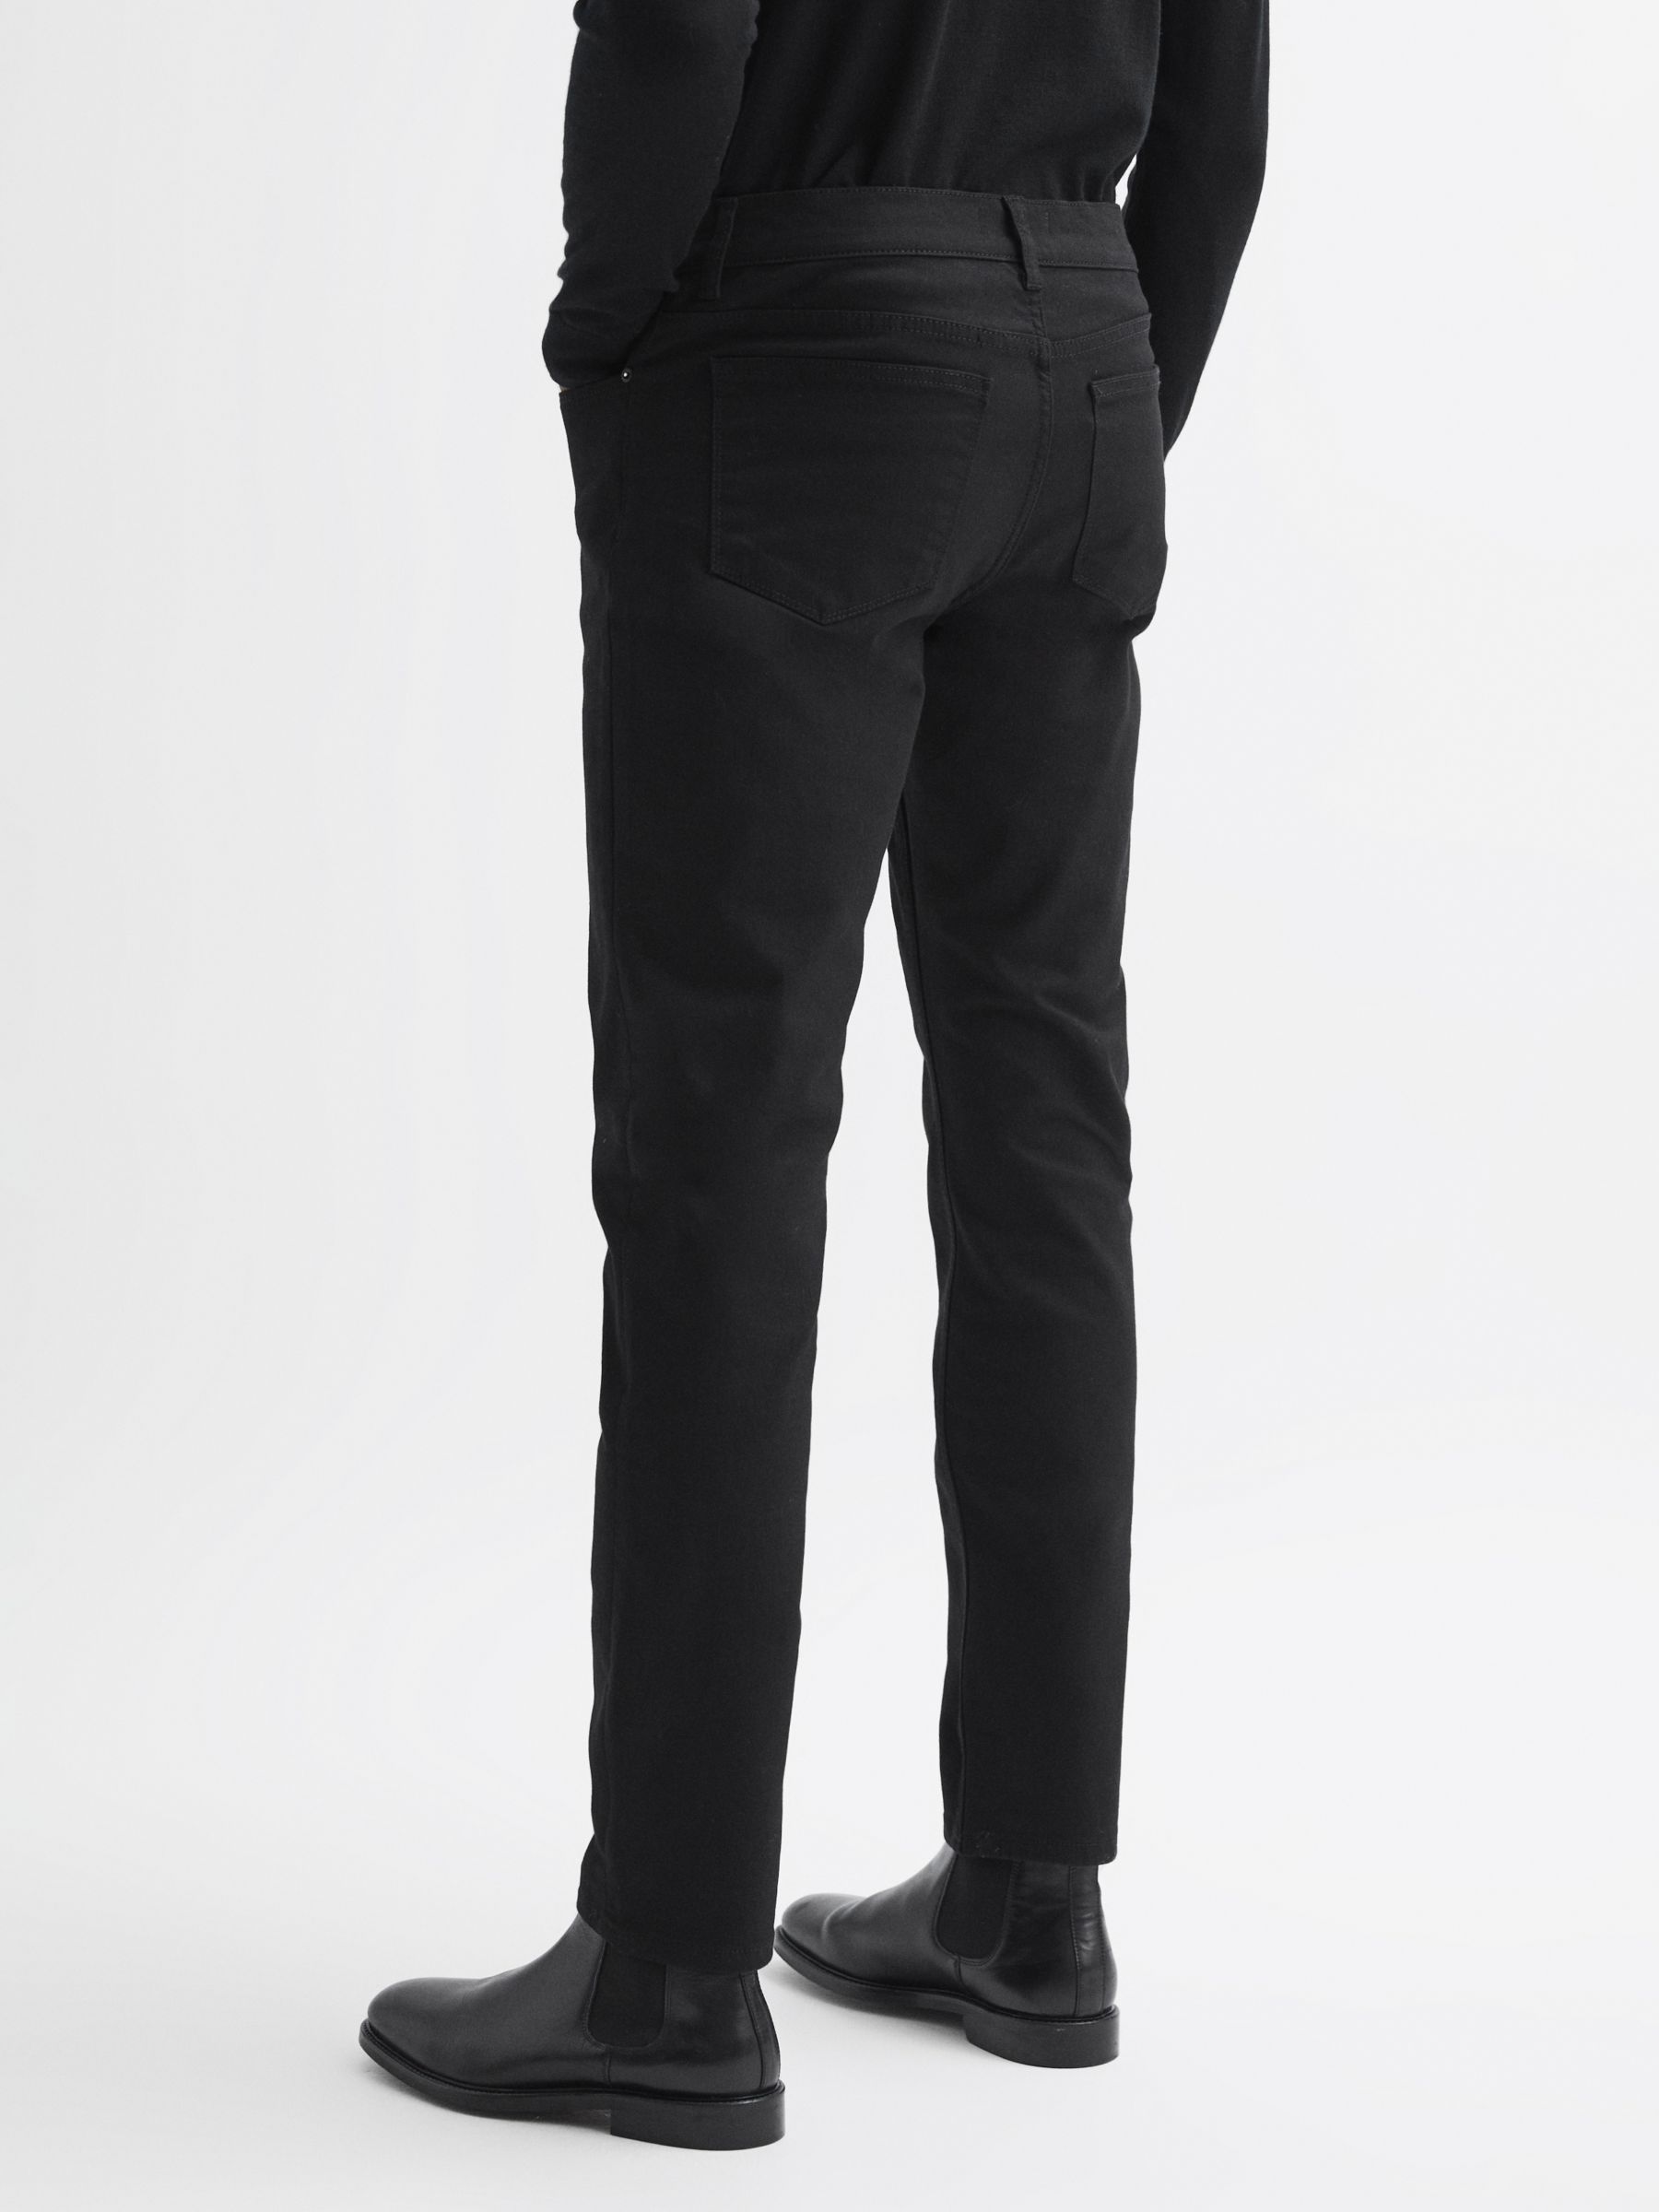 Buy Reiss Jet Slim Fit Jeans, Black Online at johnlewis.com